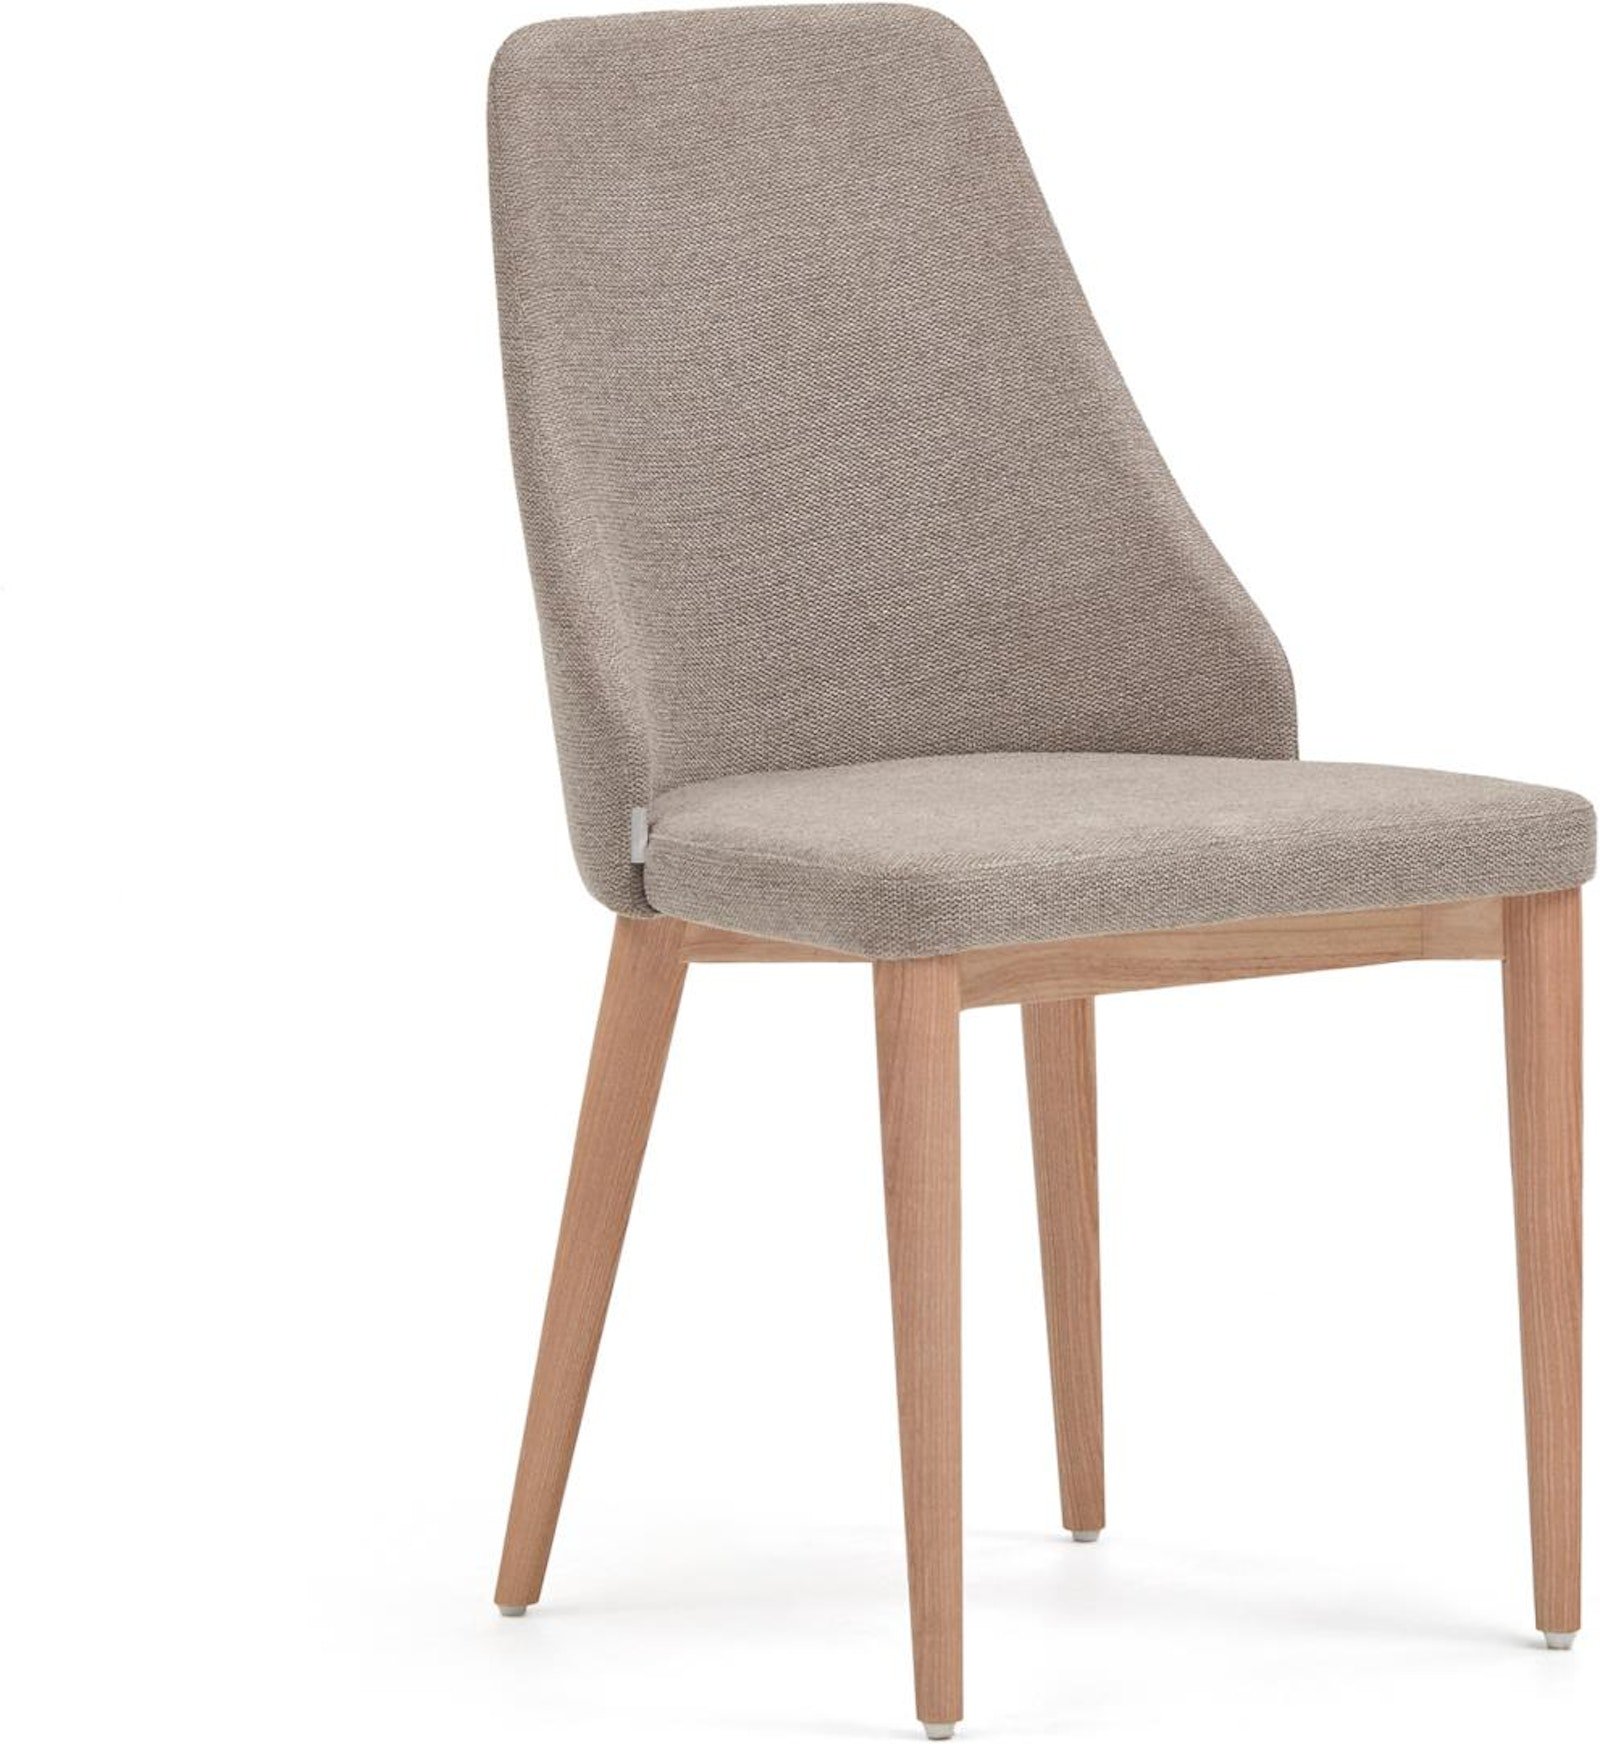 Rosie, Spisebordsstole, nordisk, moderne, rustik, stof by Laforma (H: 88 cm. x B: 48 cm. x L: 56 cm., Brun/Natur)